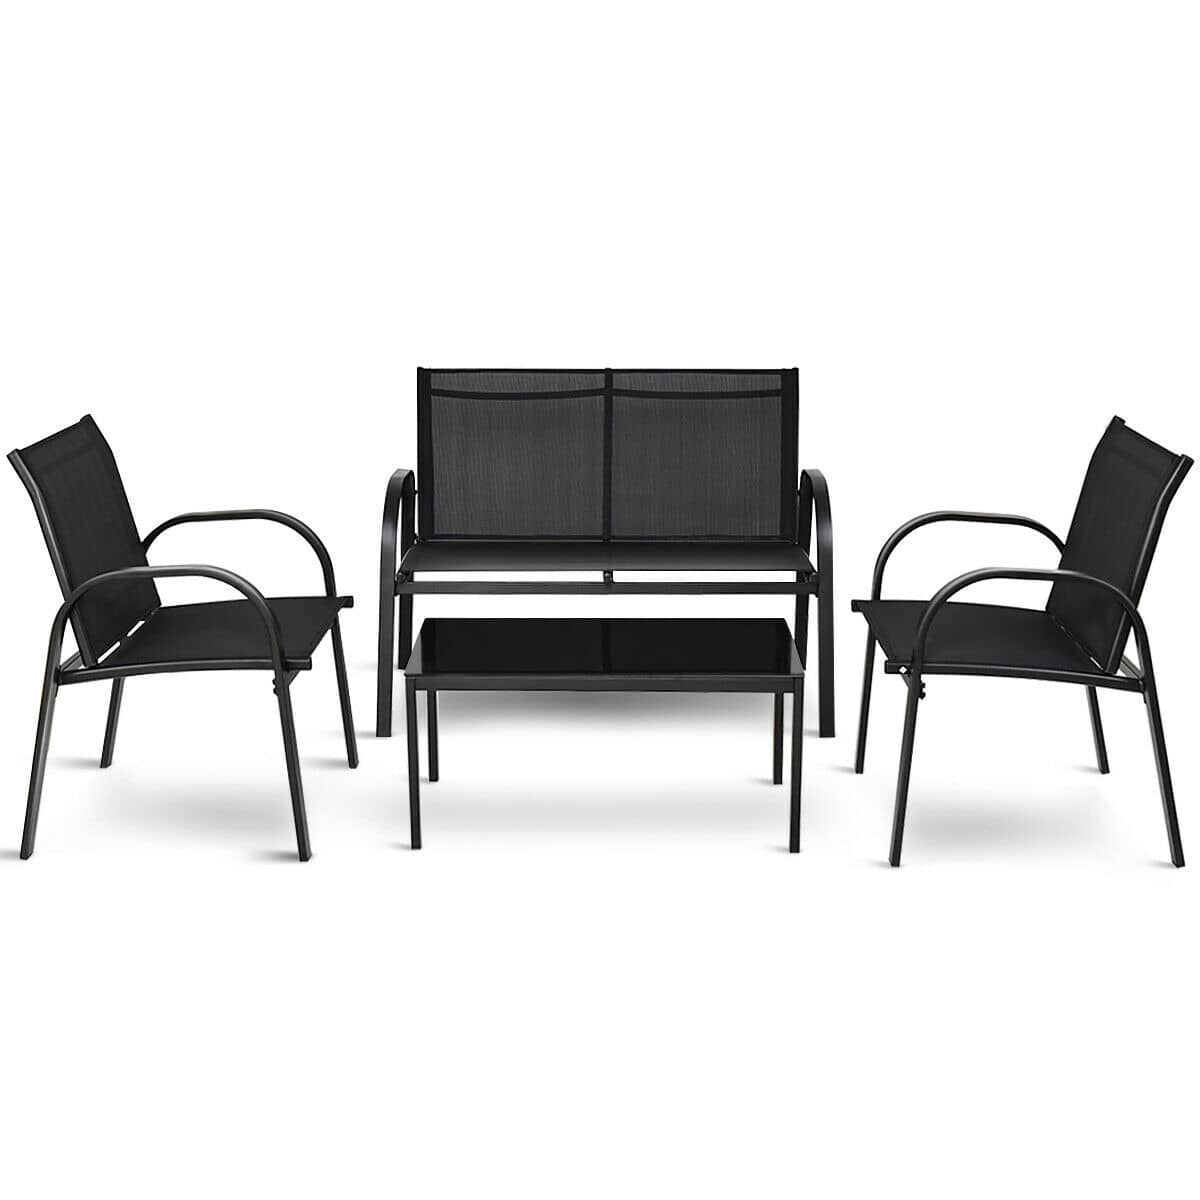 CASAINC 4 Pieces Patio Furniture Set with Glass Top Coffee Table-Casainc Canada